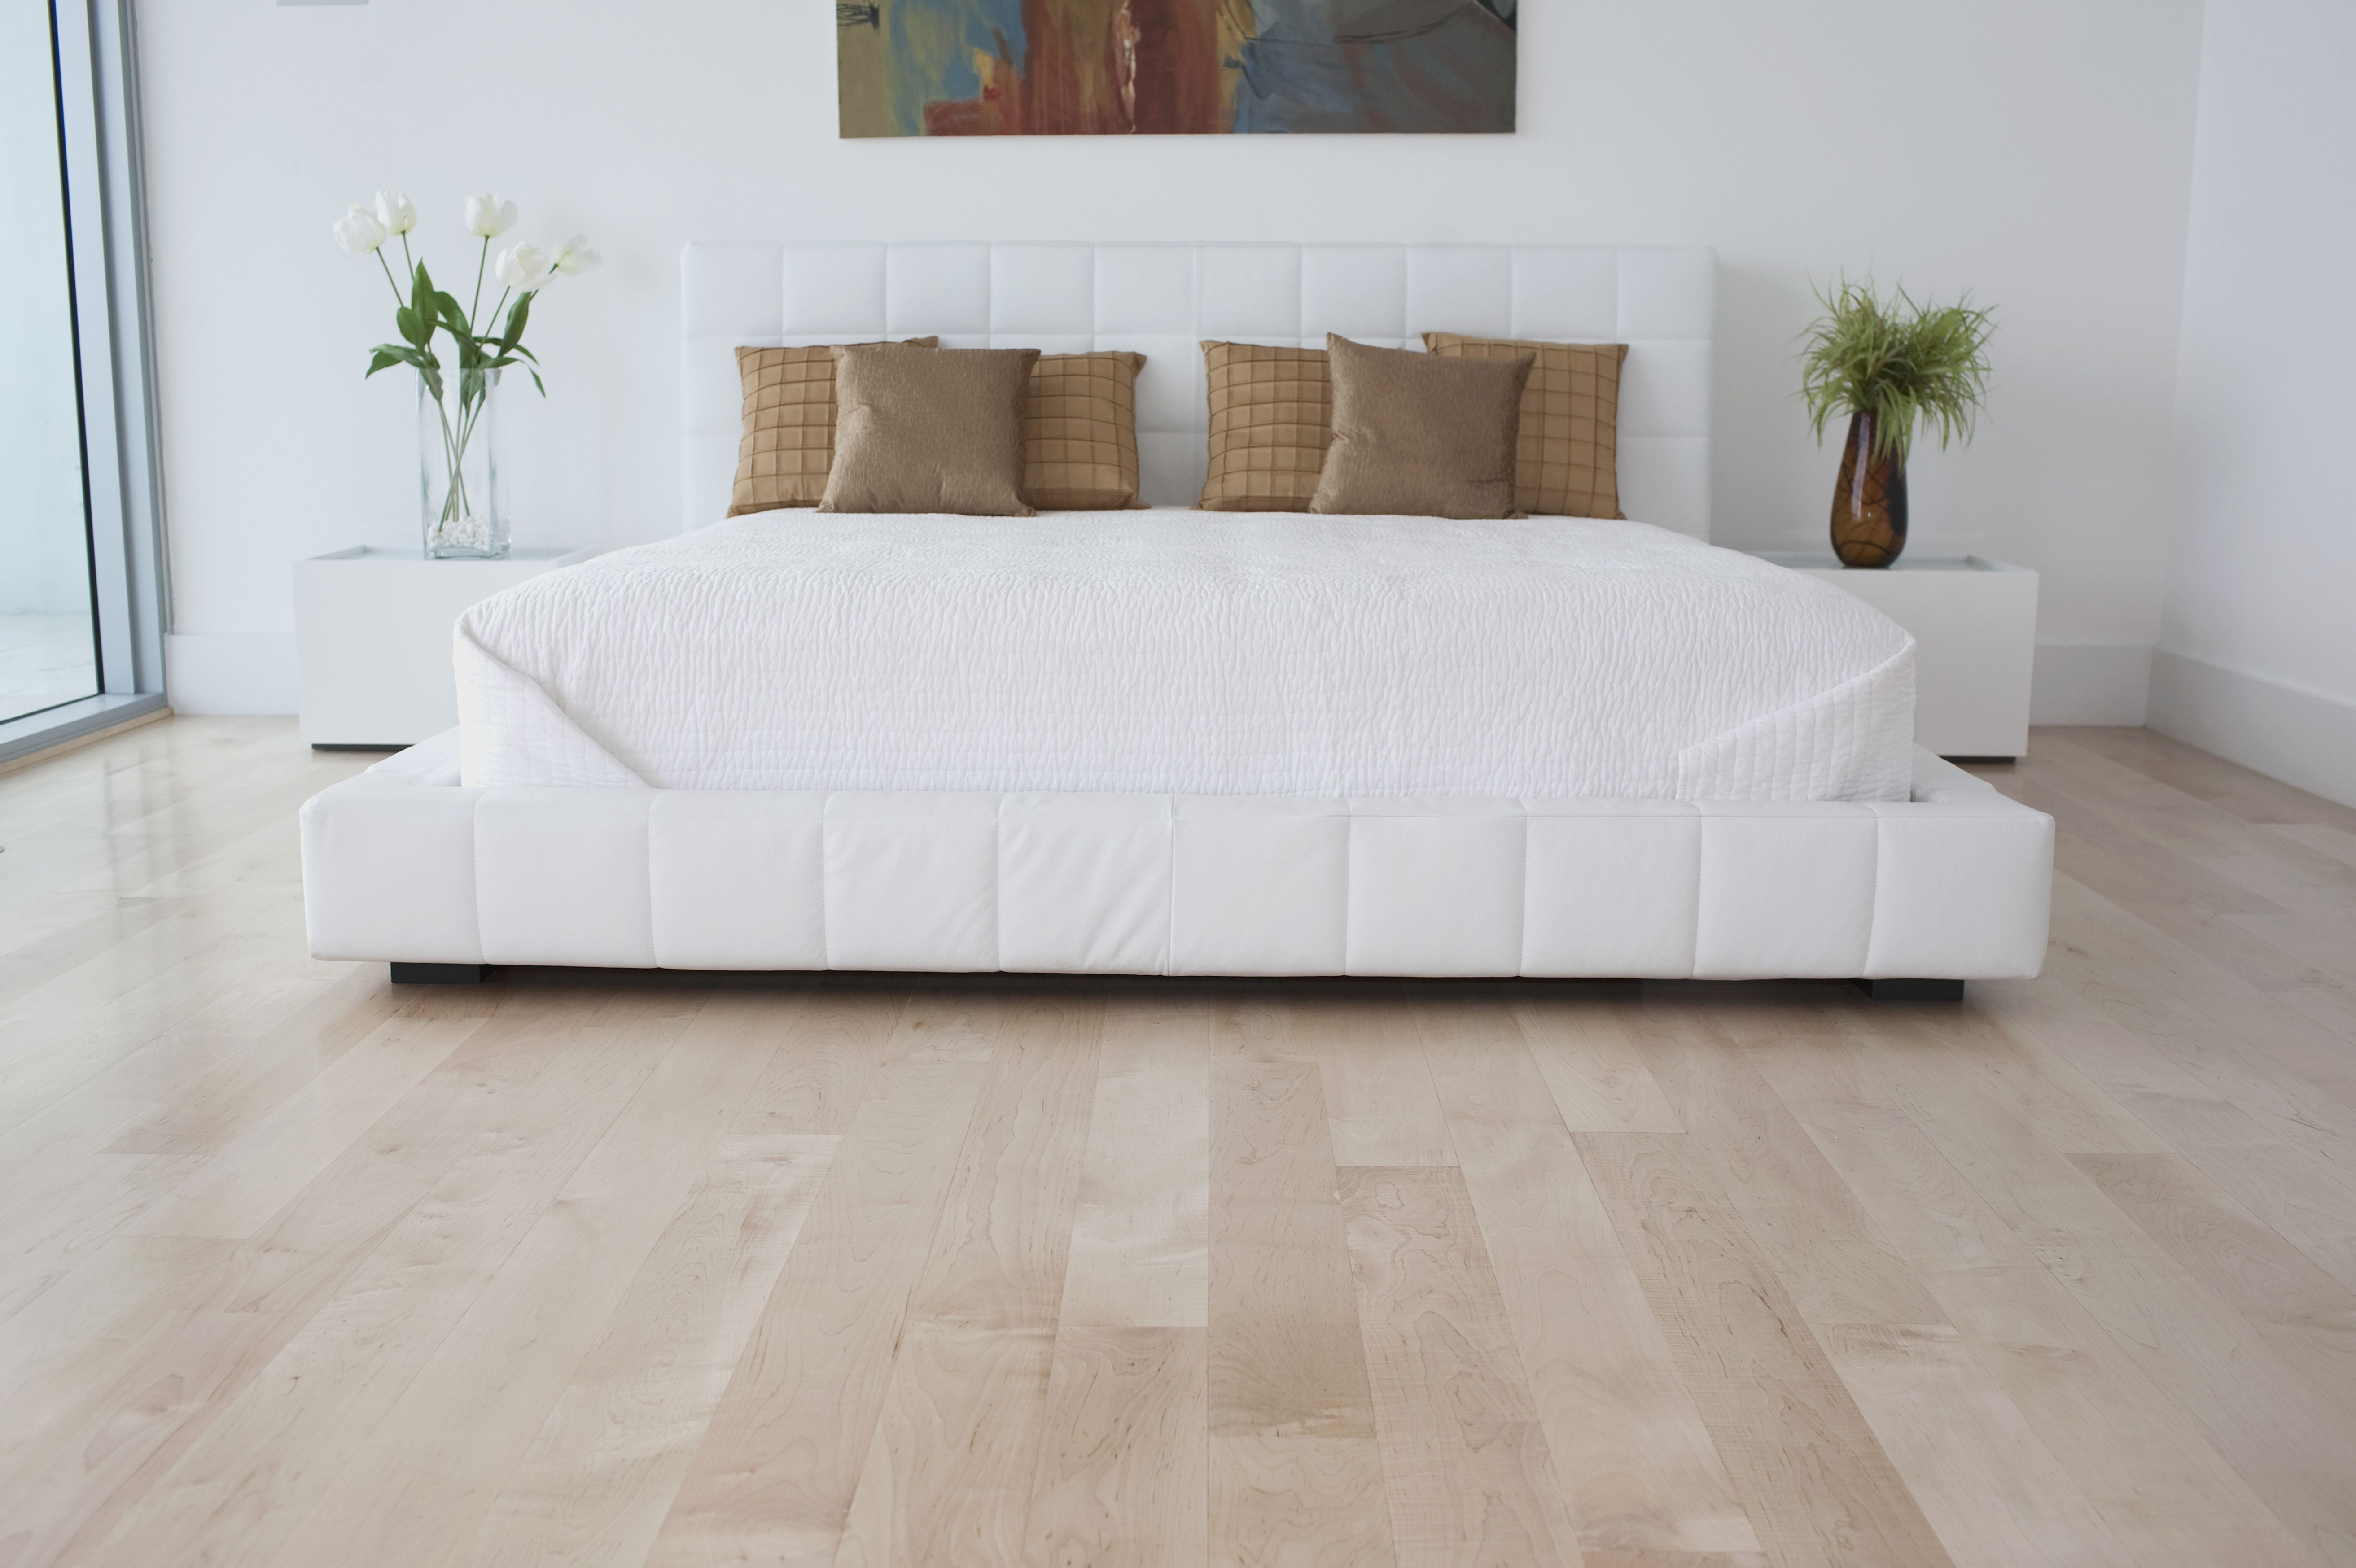 modern hardwood floor colors of 5 best bedroom flooring materials inside interiors of a bedroom 126171674 57be063d3df78cc16e3cc6cf